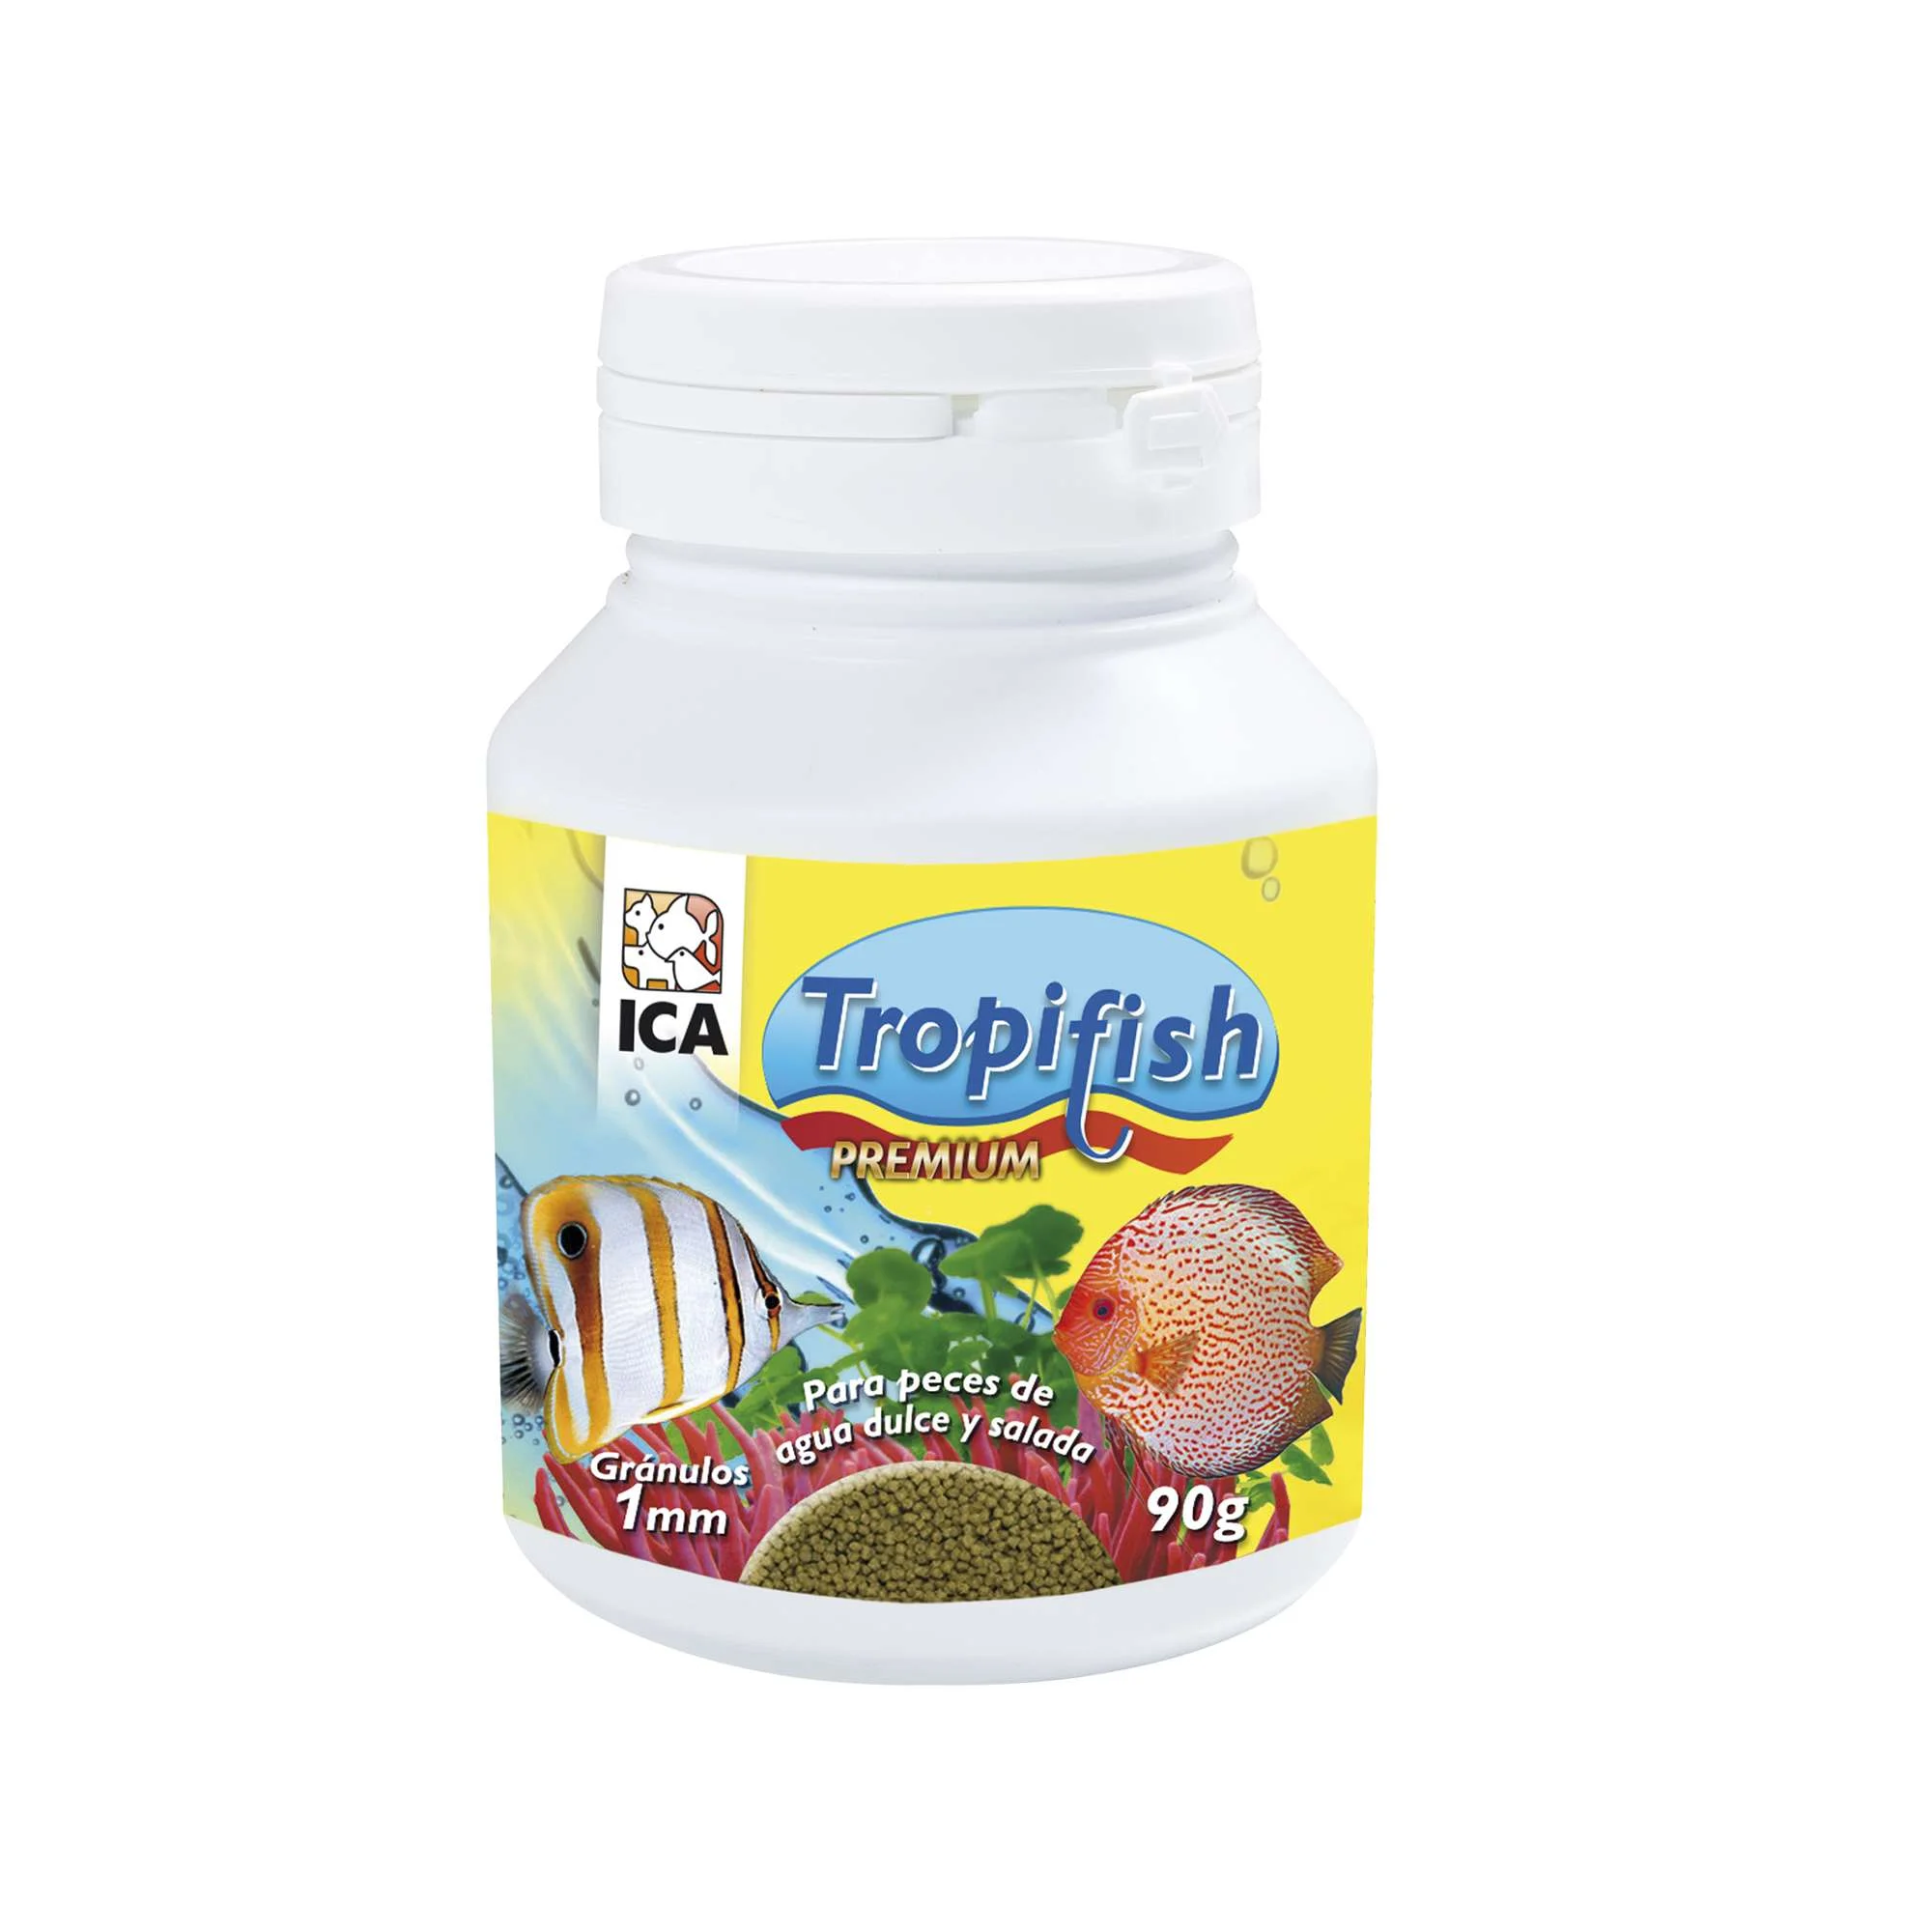 tf90m-alimento-tropifish-premium-1-mm_empaquetado_4207.jpg